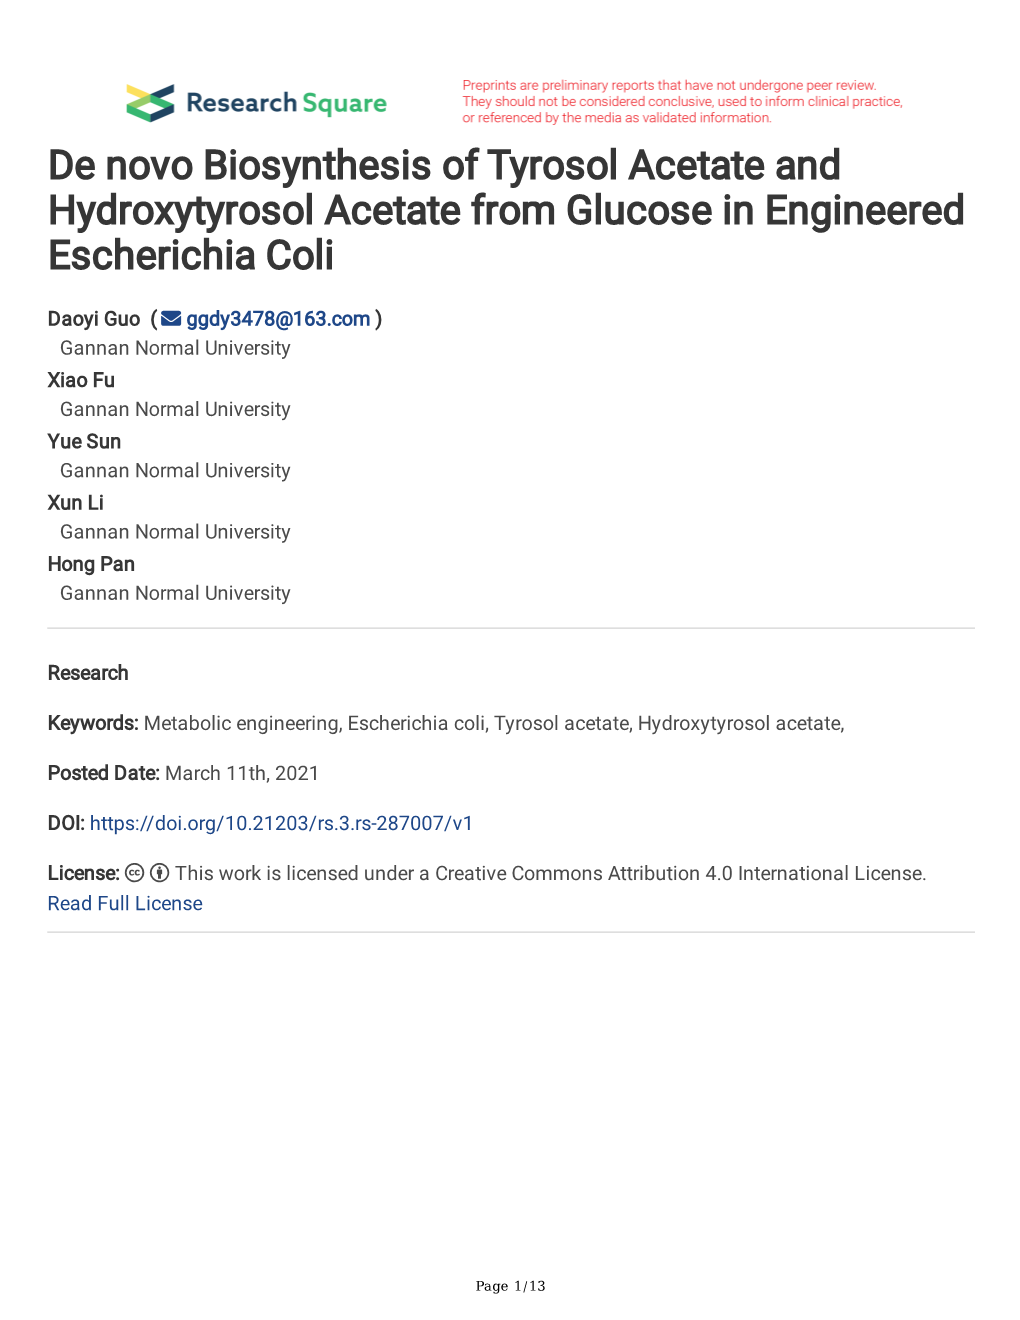 De Novo Biosynthesis of Tyrosol Acetate and Hydroxytyrosol Acetate from Glucose in Engineered Escherichia Coli